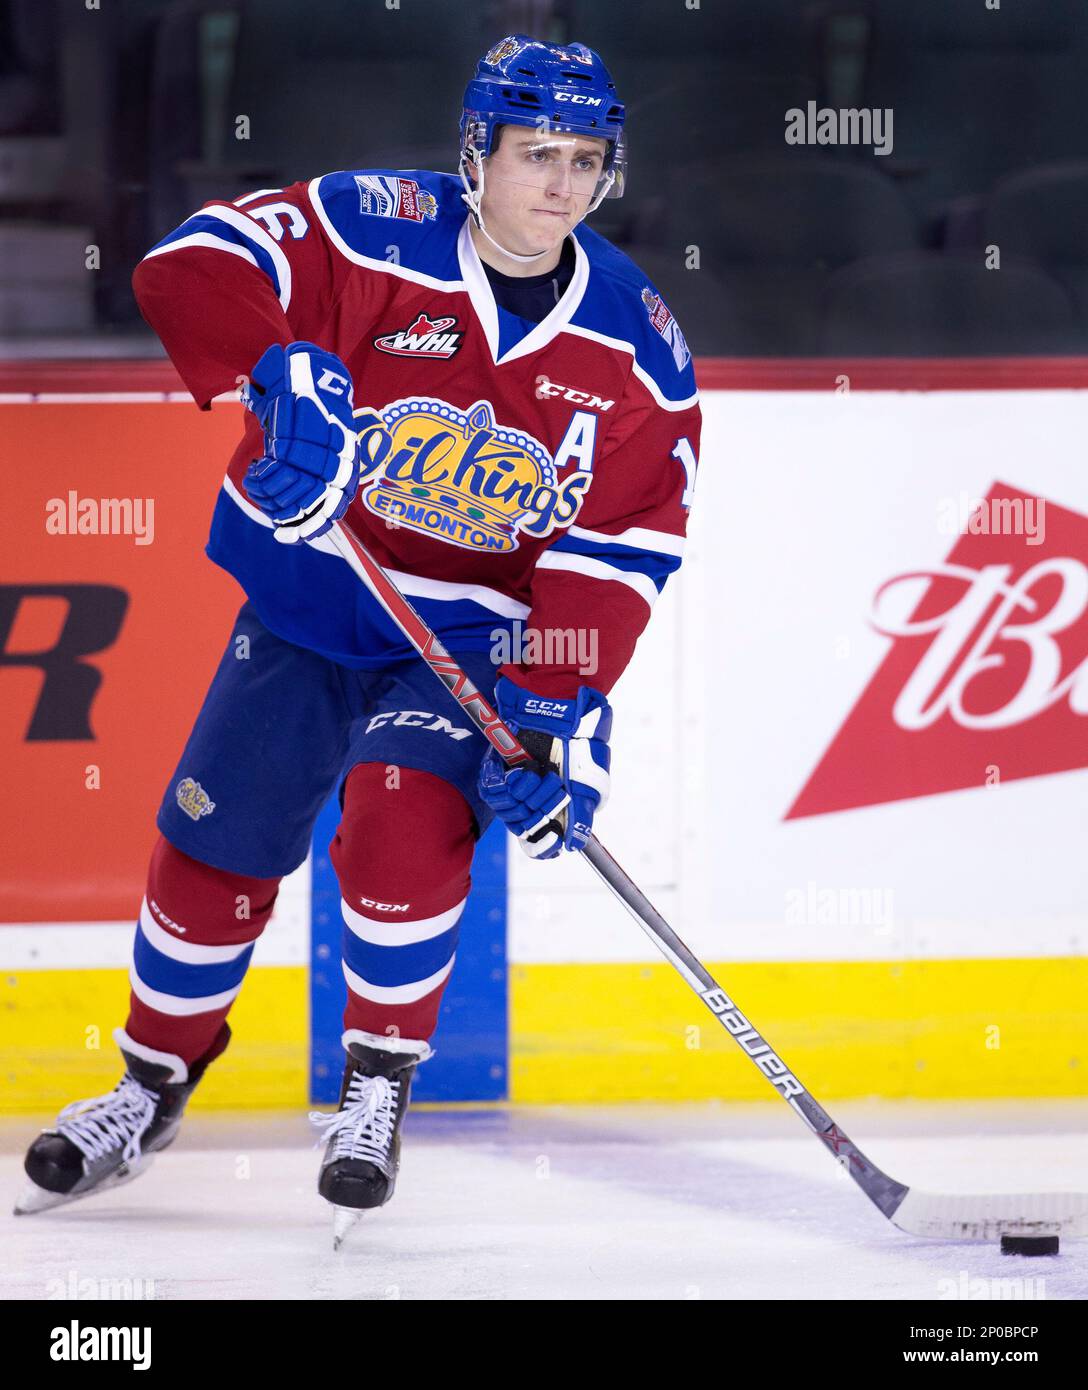 Profile photo on Edmonton Oil Kings player Jakub Demek, from Slovakia, during WHL (Western Hockey League) hockey action against the Calgary Hitmen in Calgary, Alta., on March 5, 2022